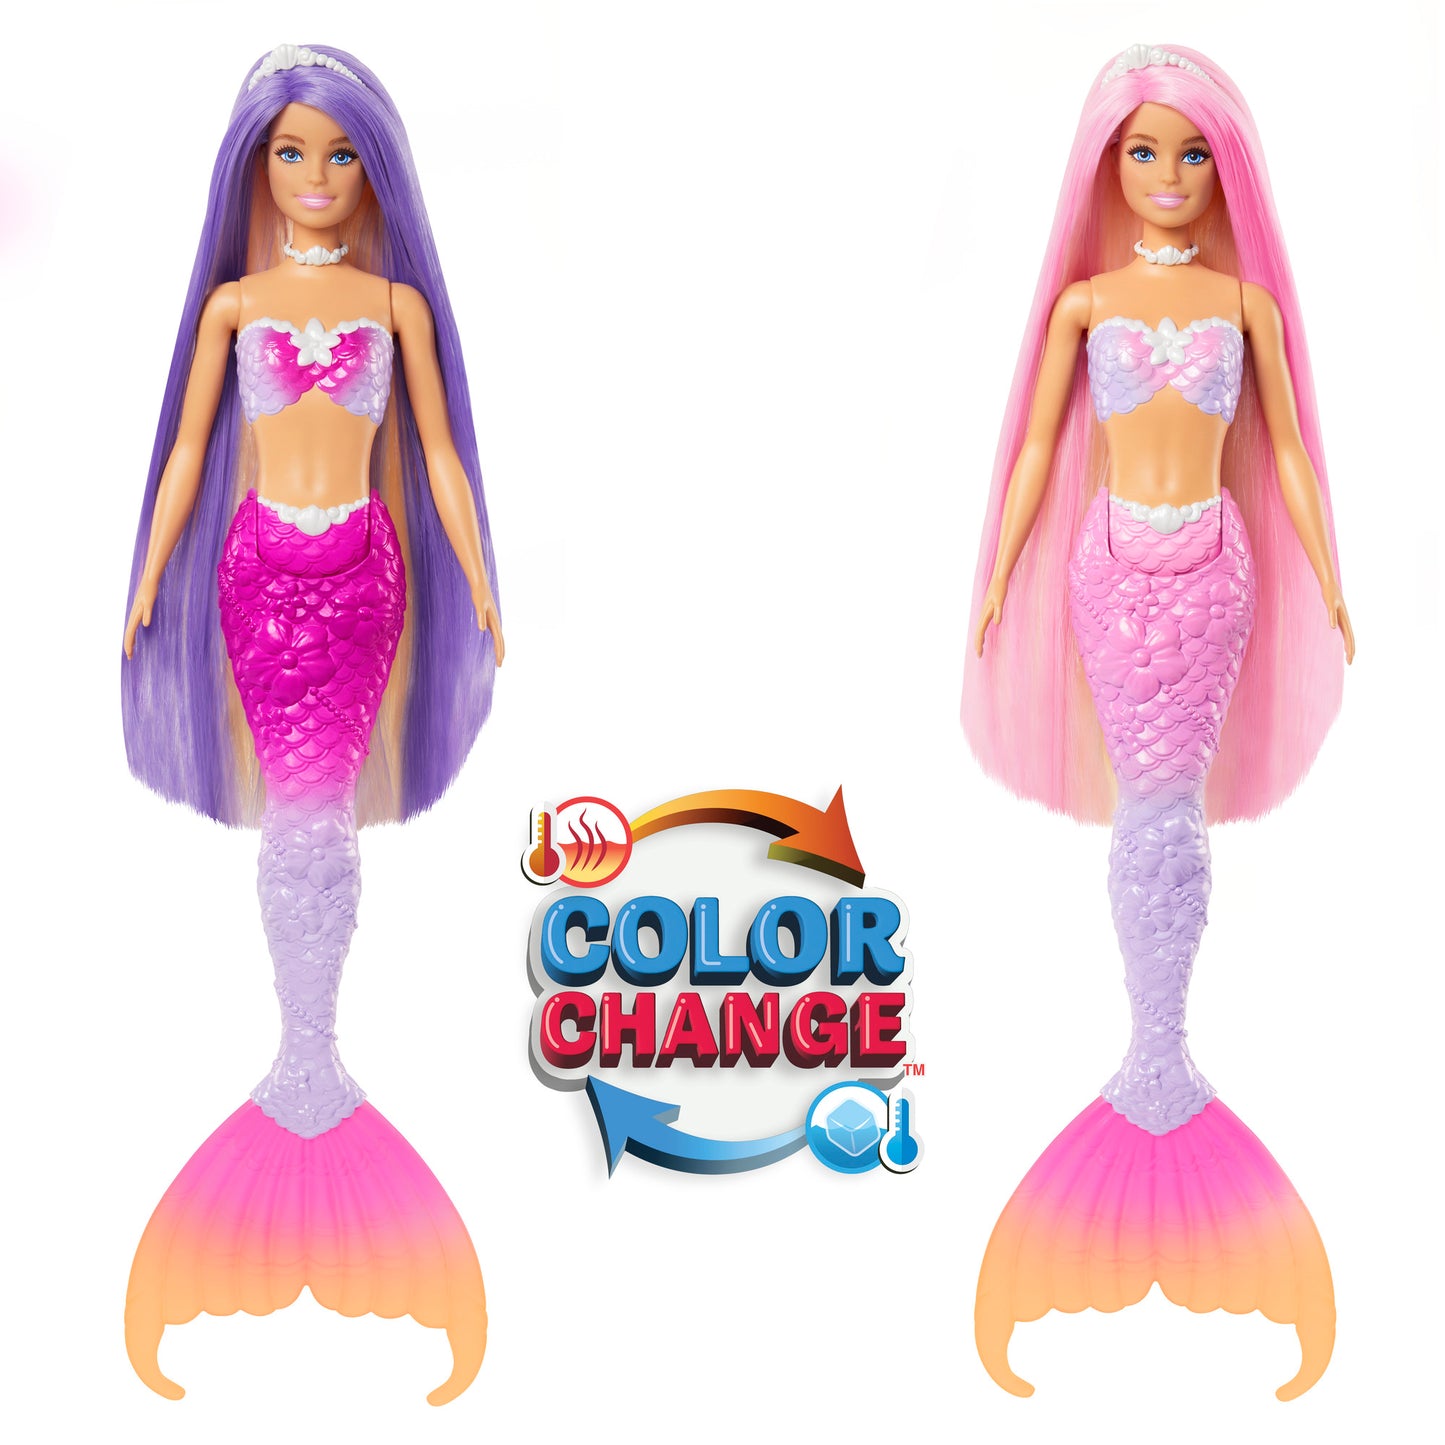 Barbie "Malibu" Mermaid Doll